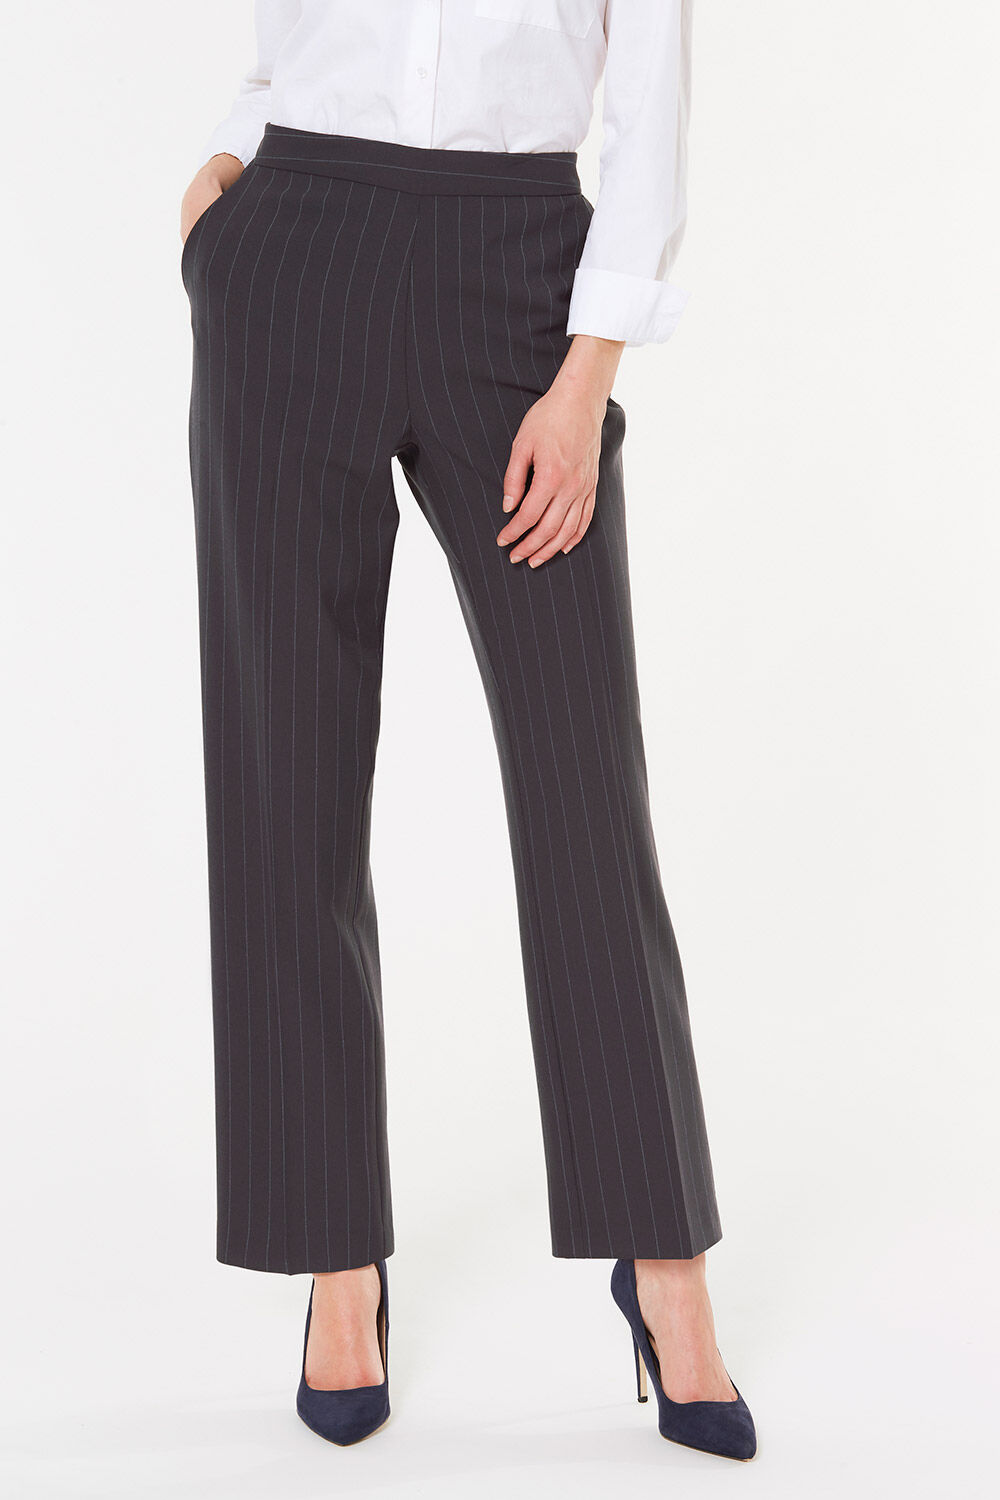 Bonmarche Workwear Classic Straight Leg Stripe Pull On Trouser - Navy, Size: 14